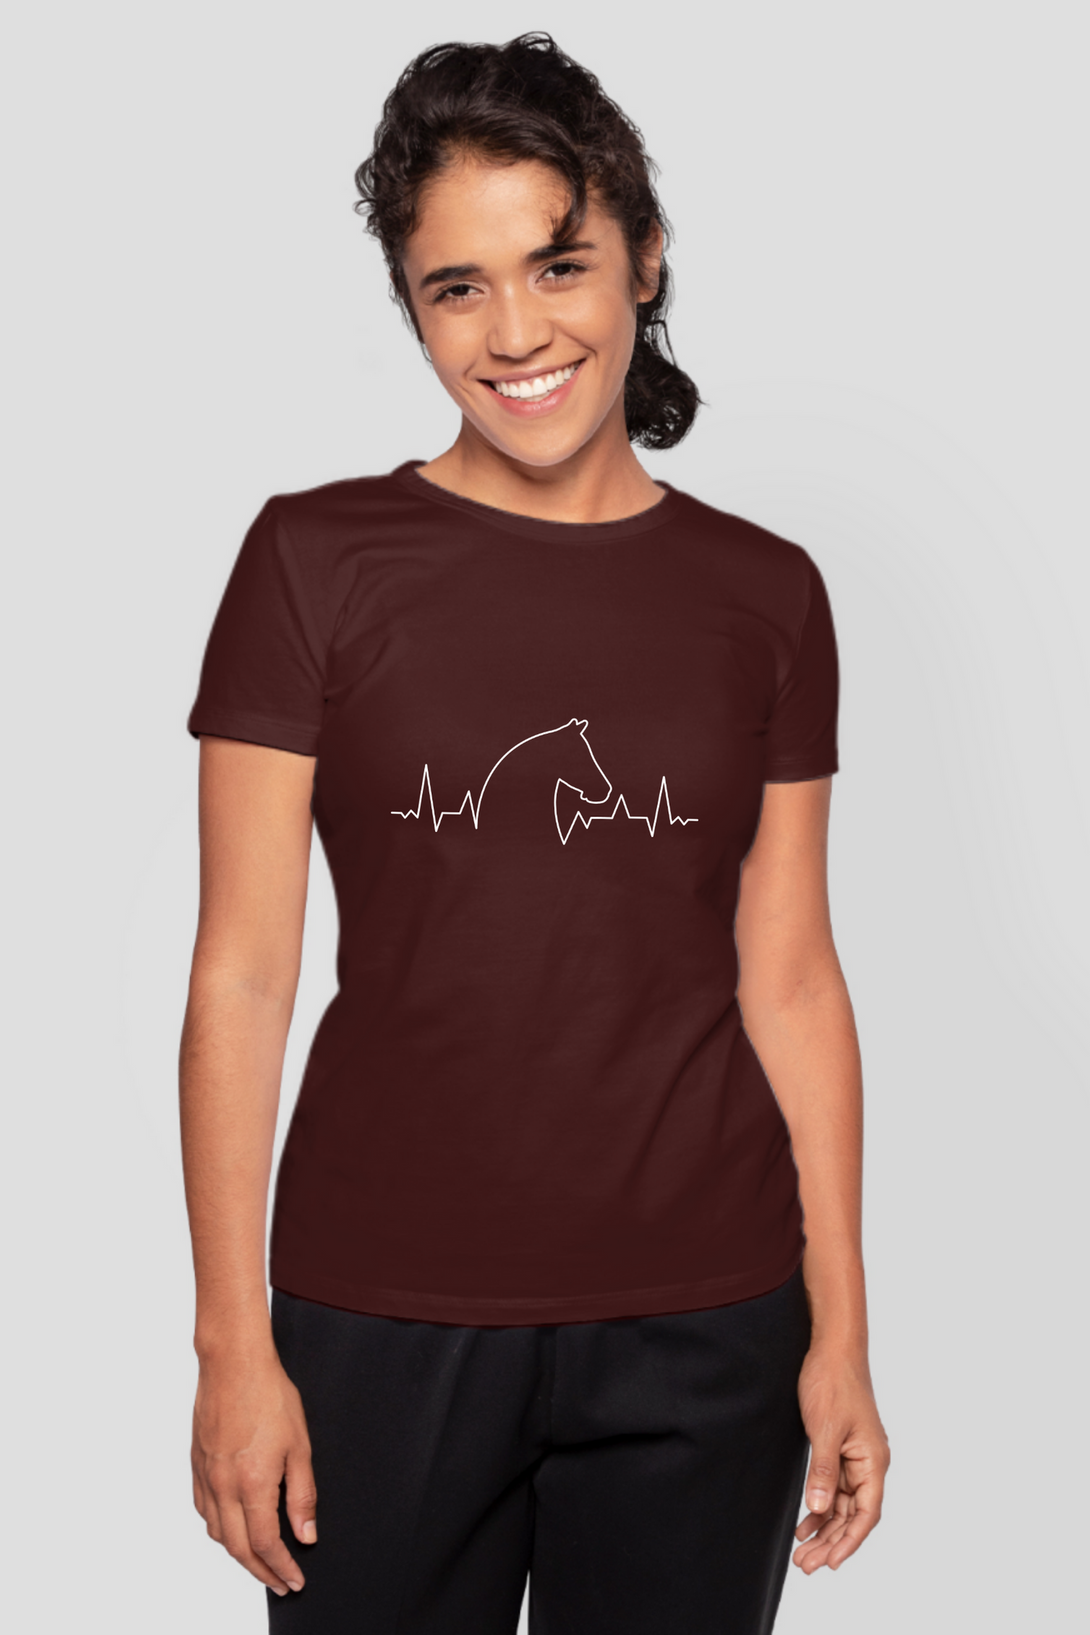 Horse Heartbeat Printed T-Shirt For Women - WowWaves - 9